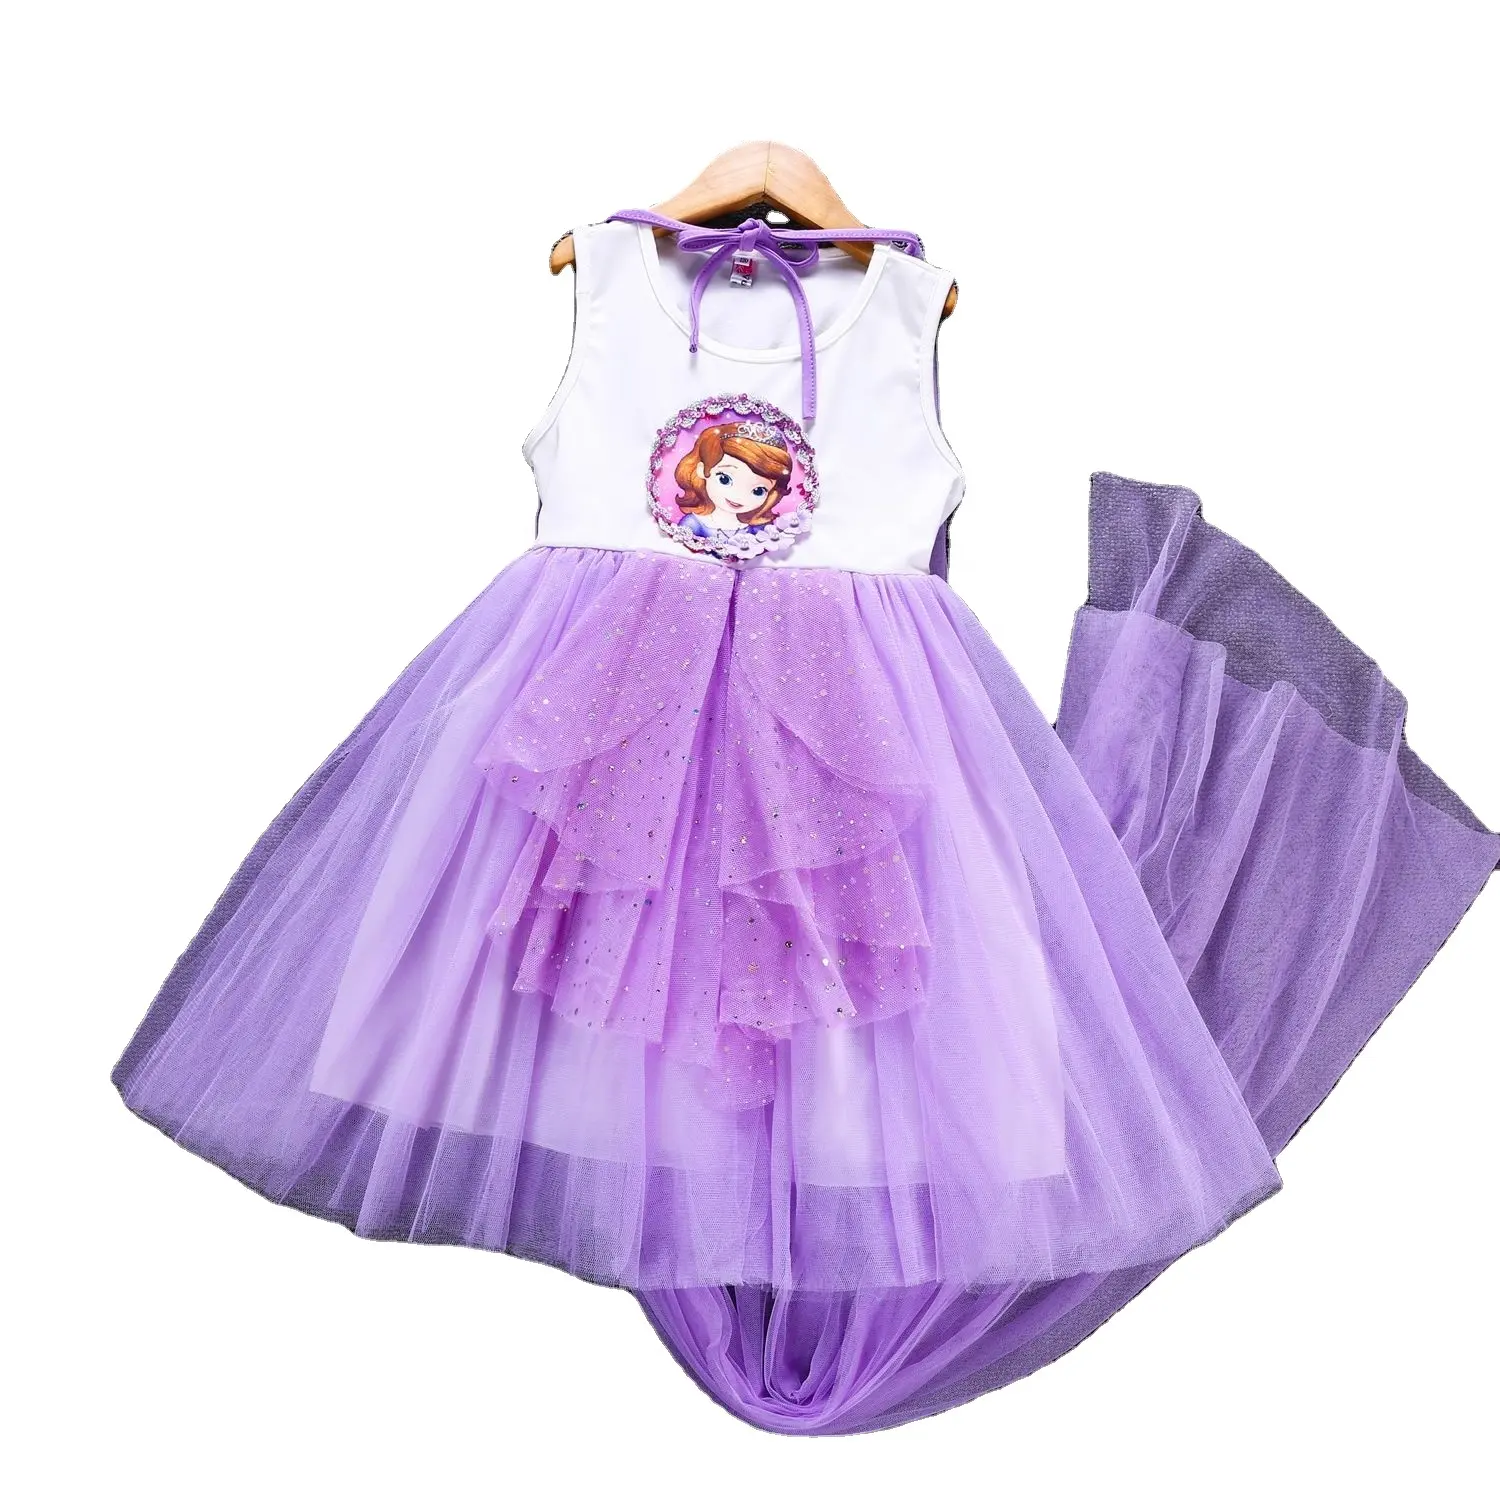 Wholesale Sleeveless Princess Dress Sofia Digital Printing Costume For Kids Disny Dress with Cape Home and Abroad